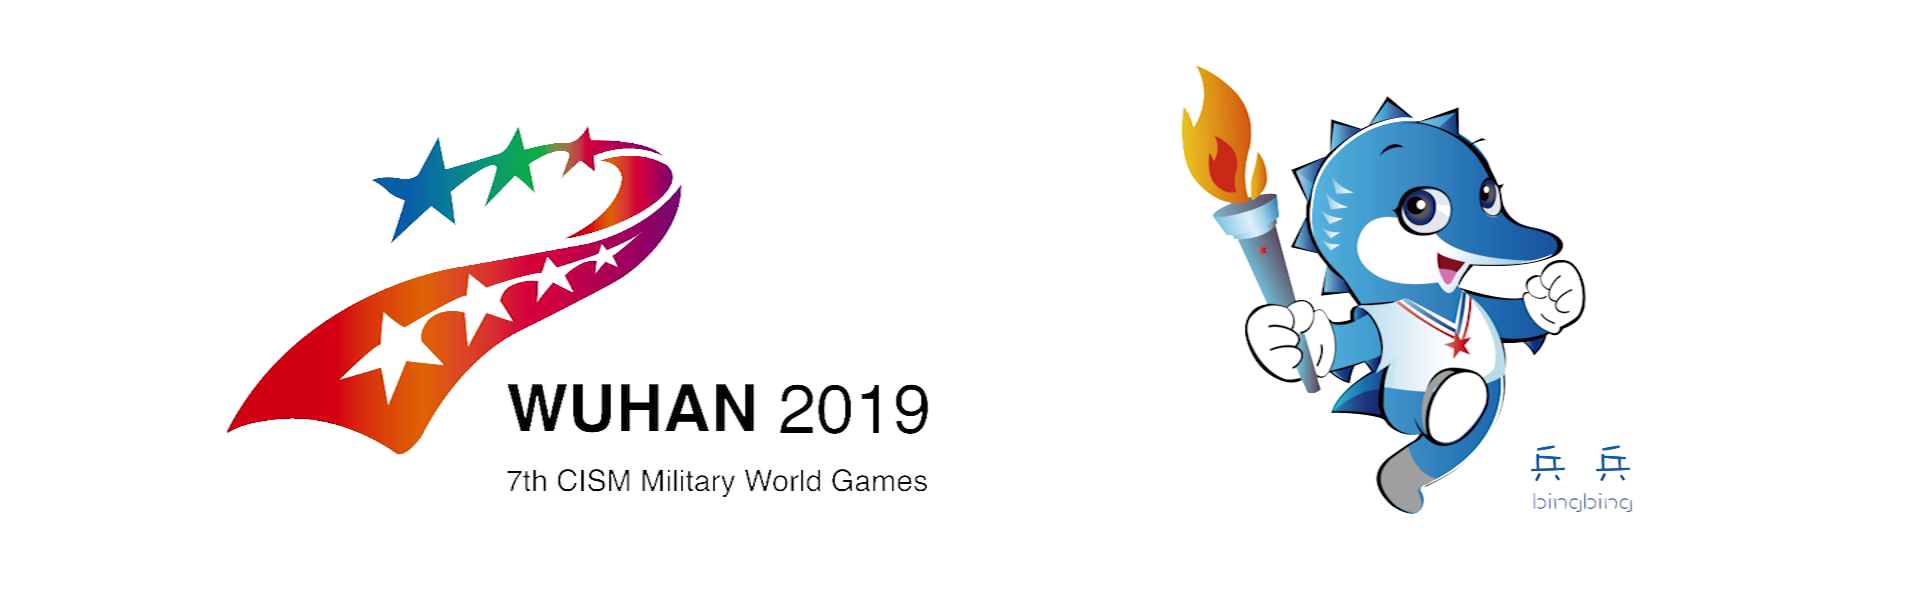 7. svetske vojne igre - Vuhan 2019